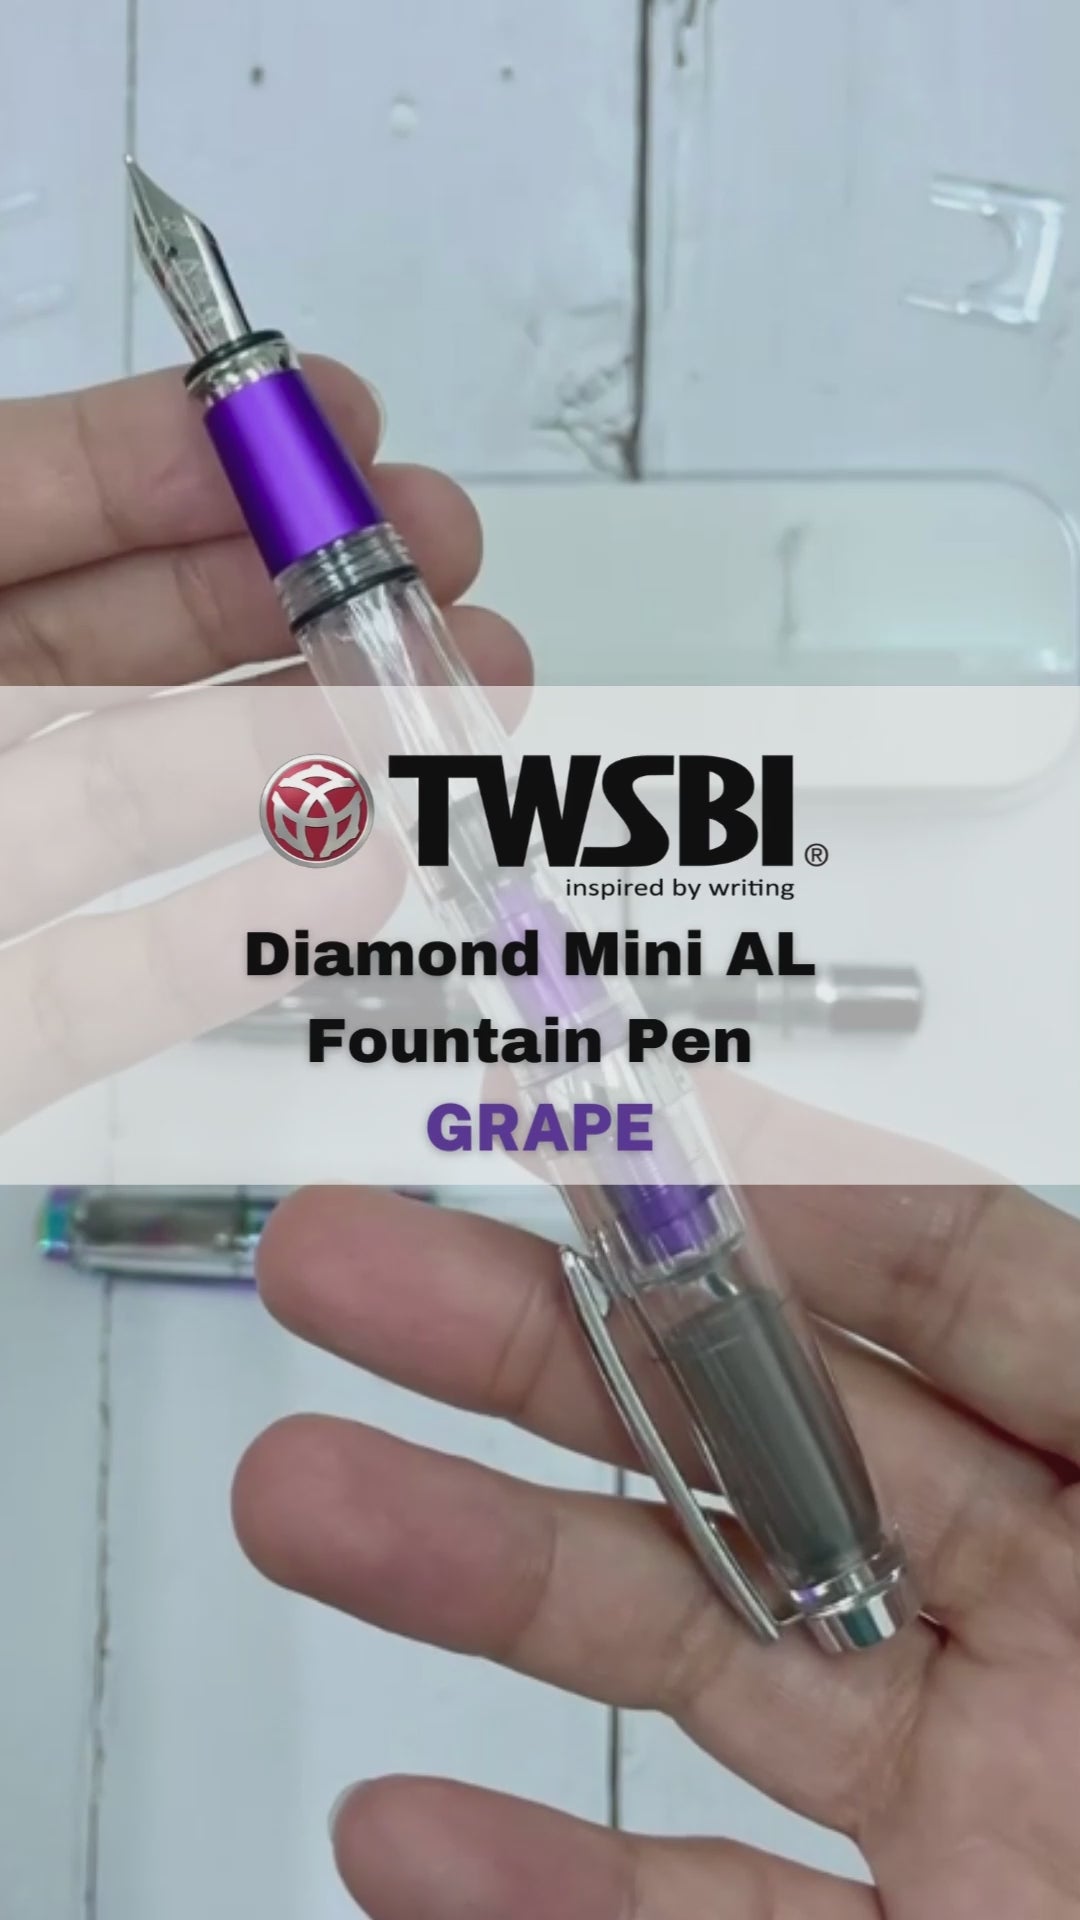 TWSBI Diamond Mini AL Fountain Pen Grape – Cityluxe